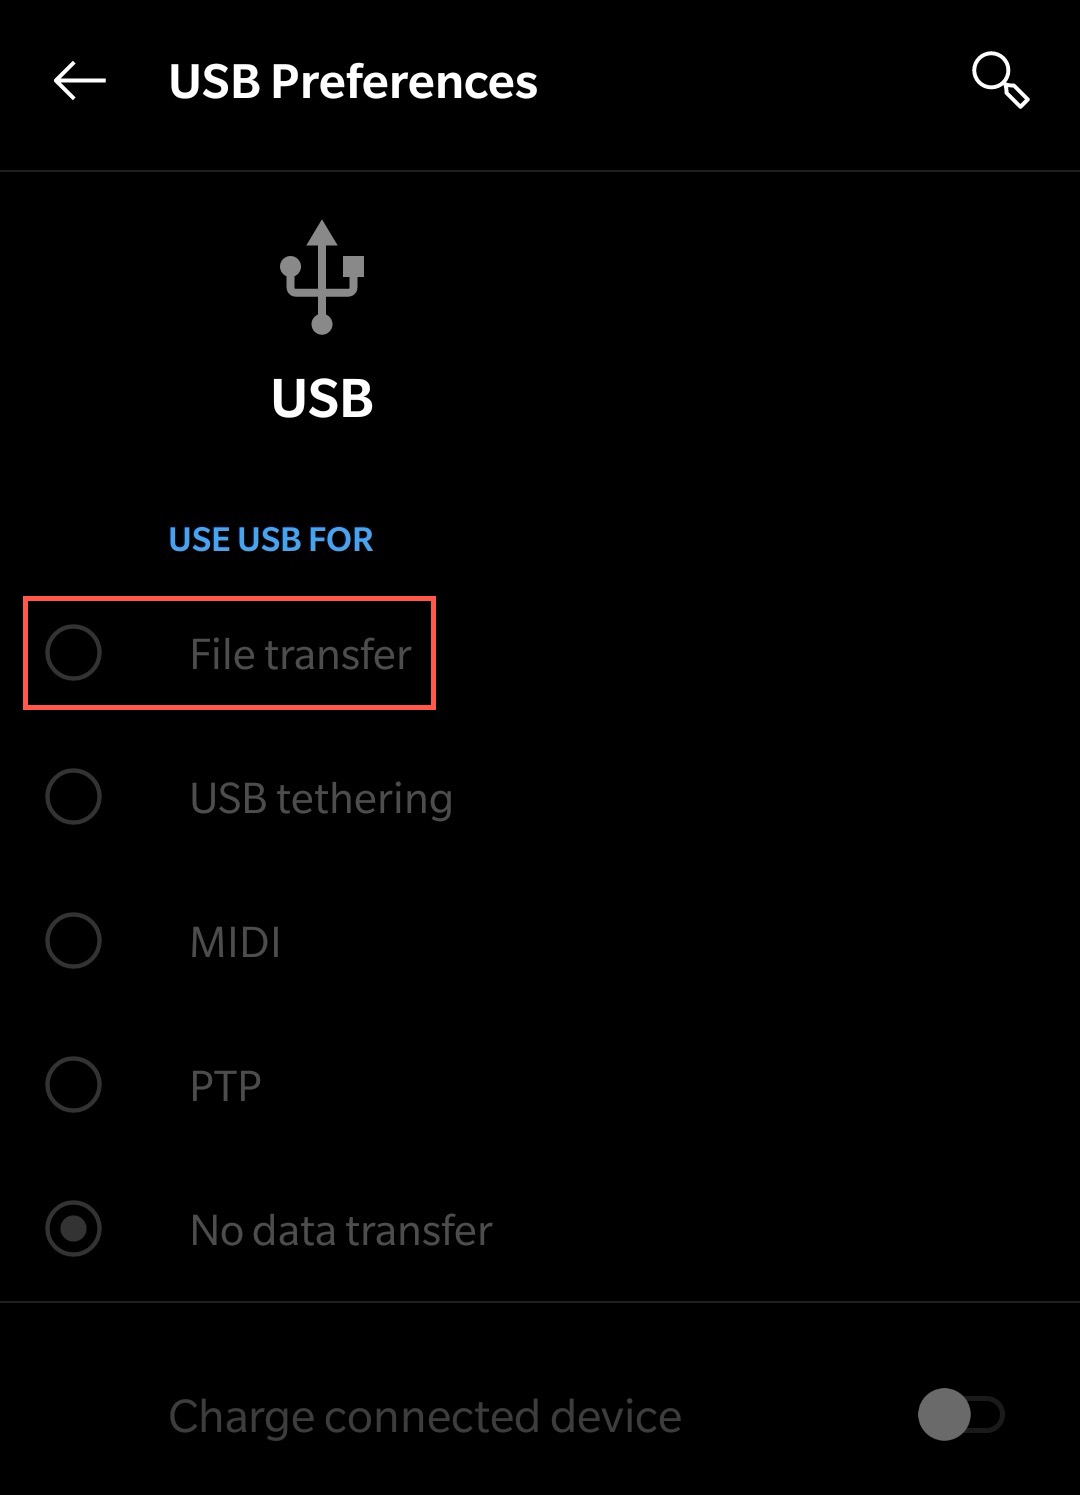 USB Preferences